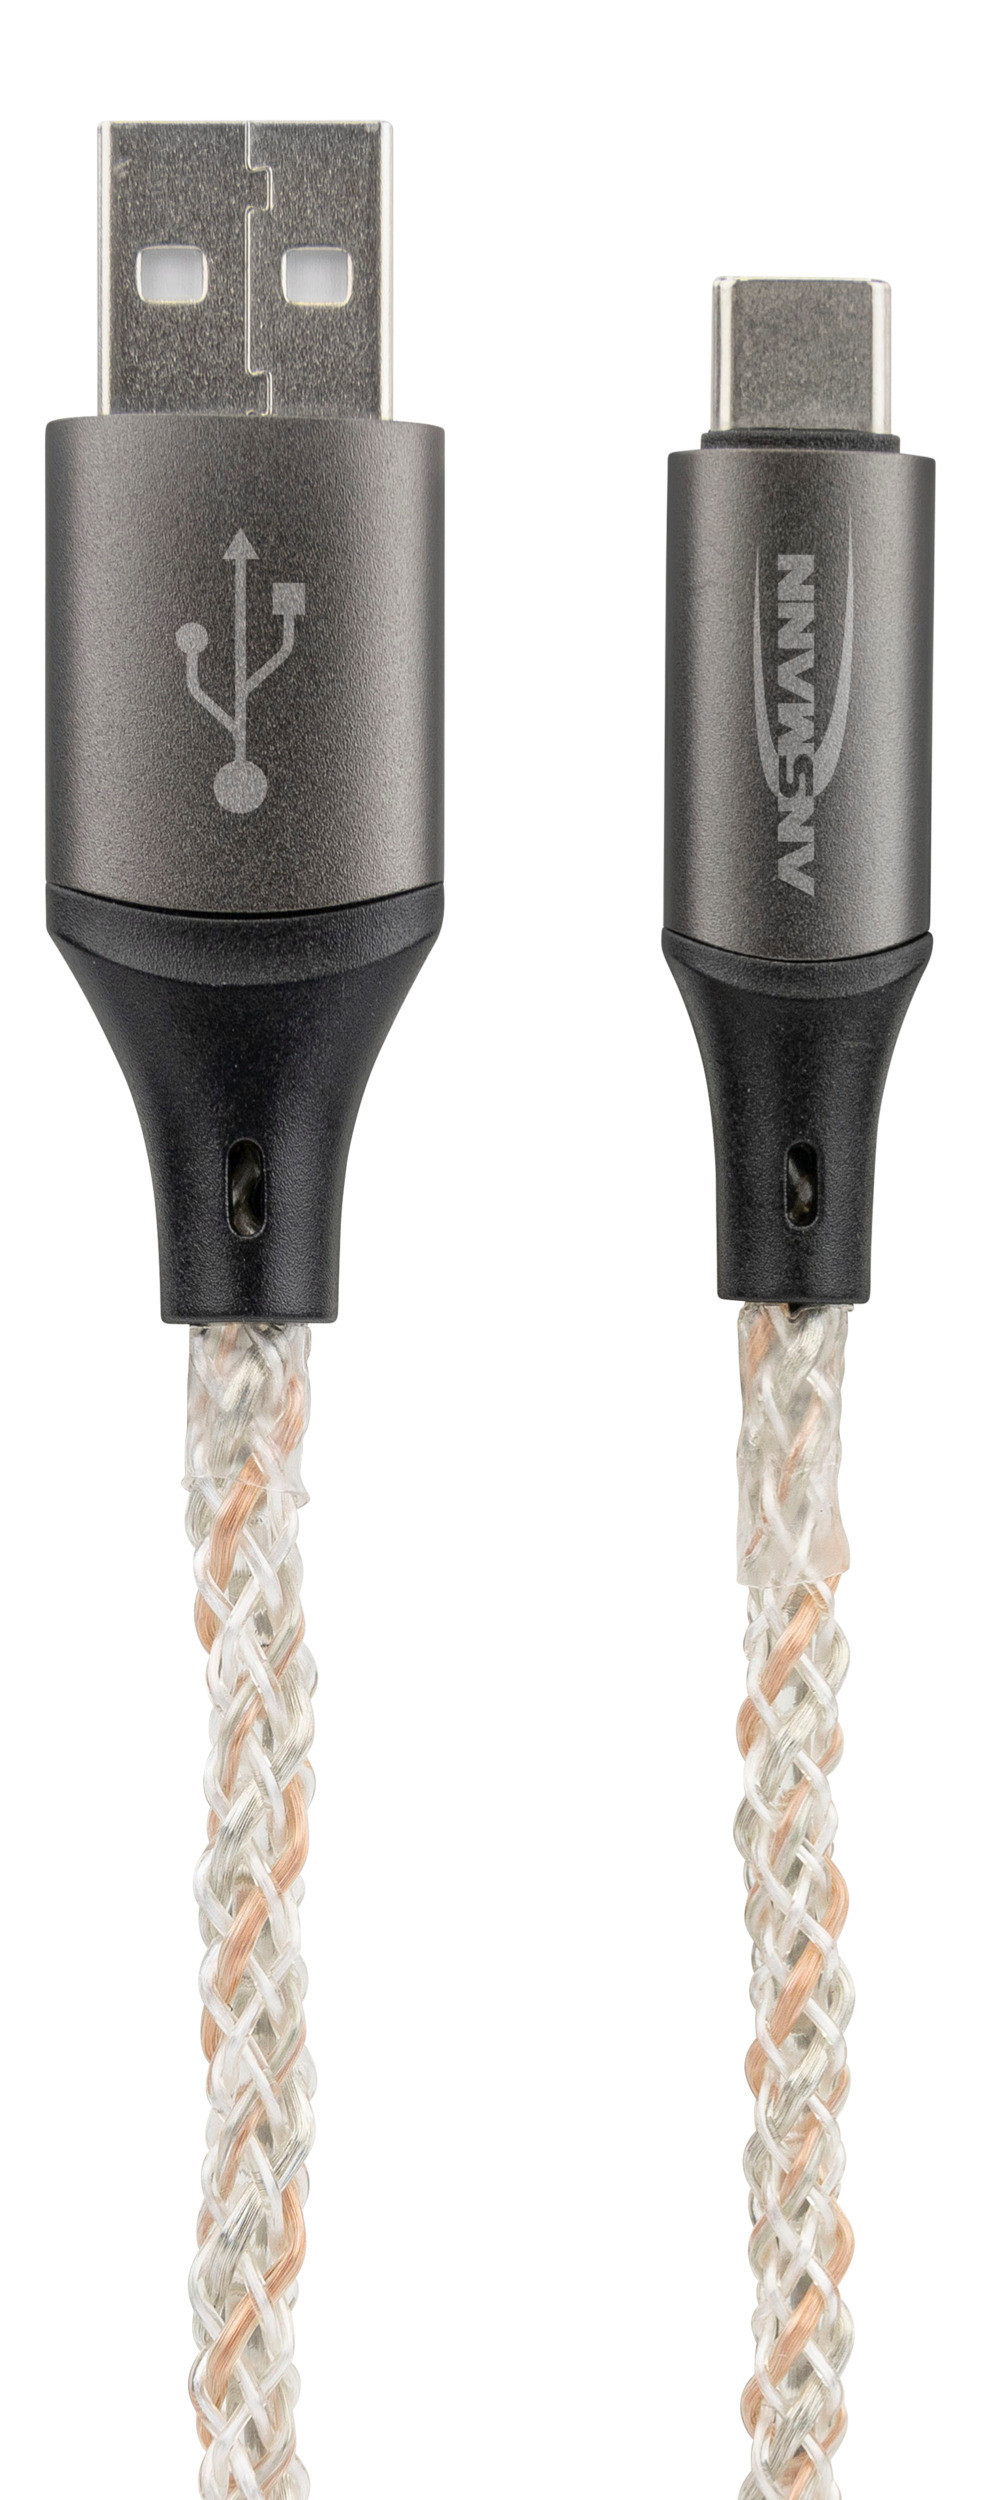 Ansmann USB - USB-C kabel 100cm met LED-verlichting